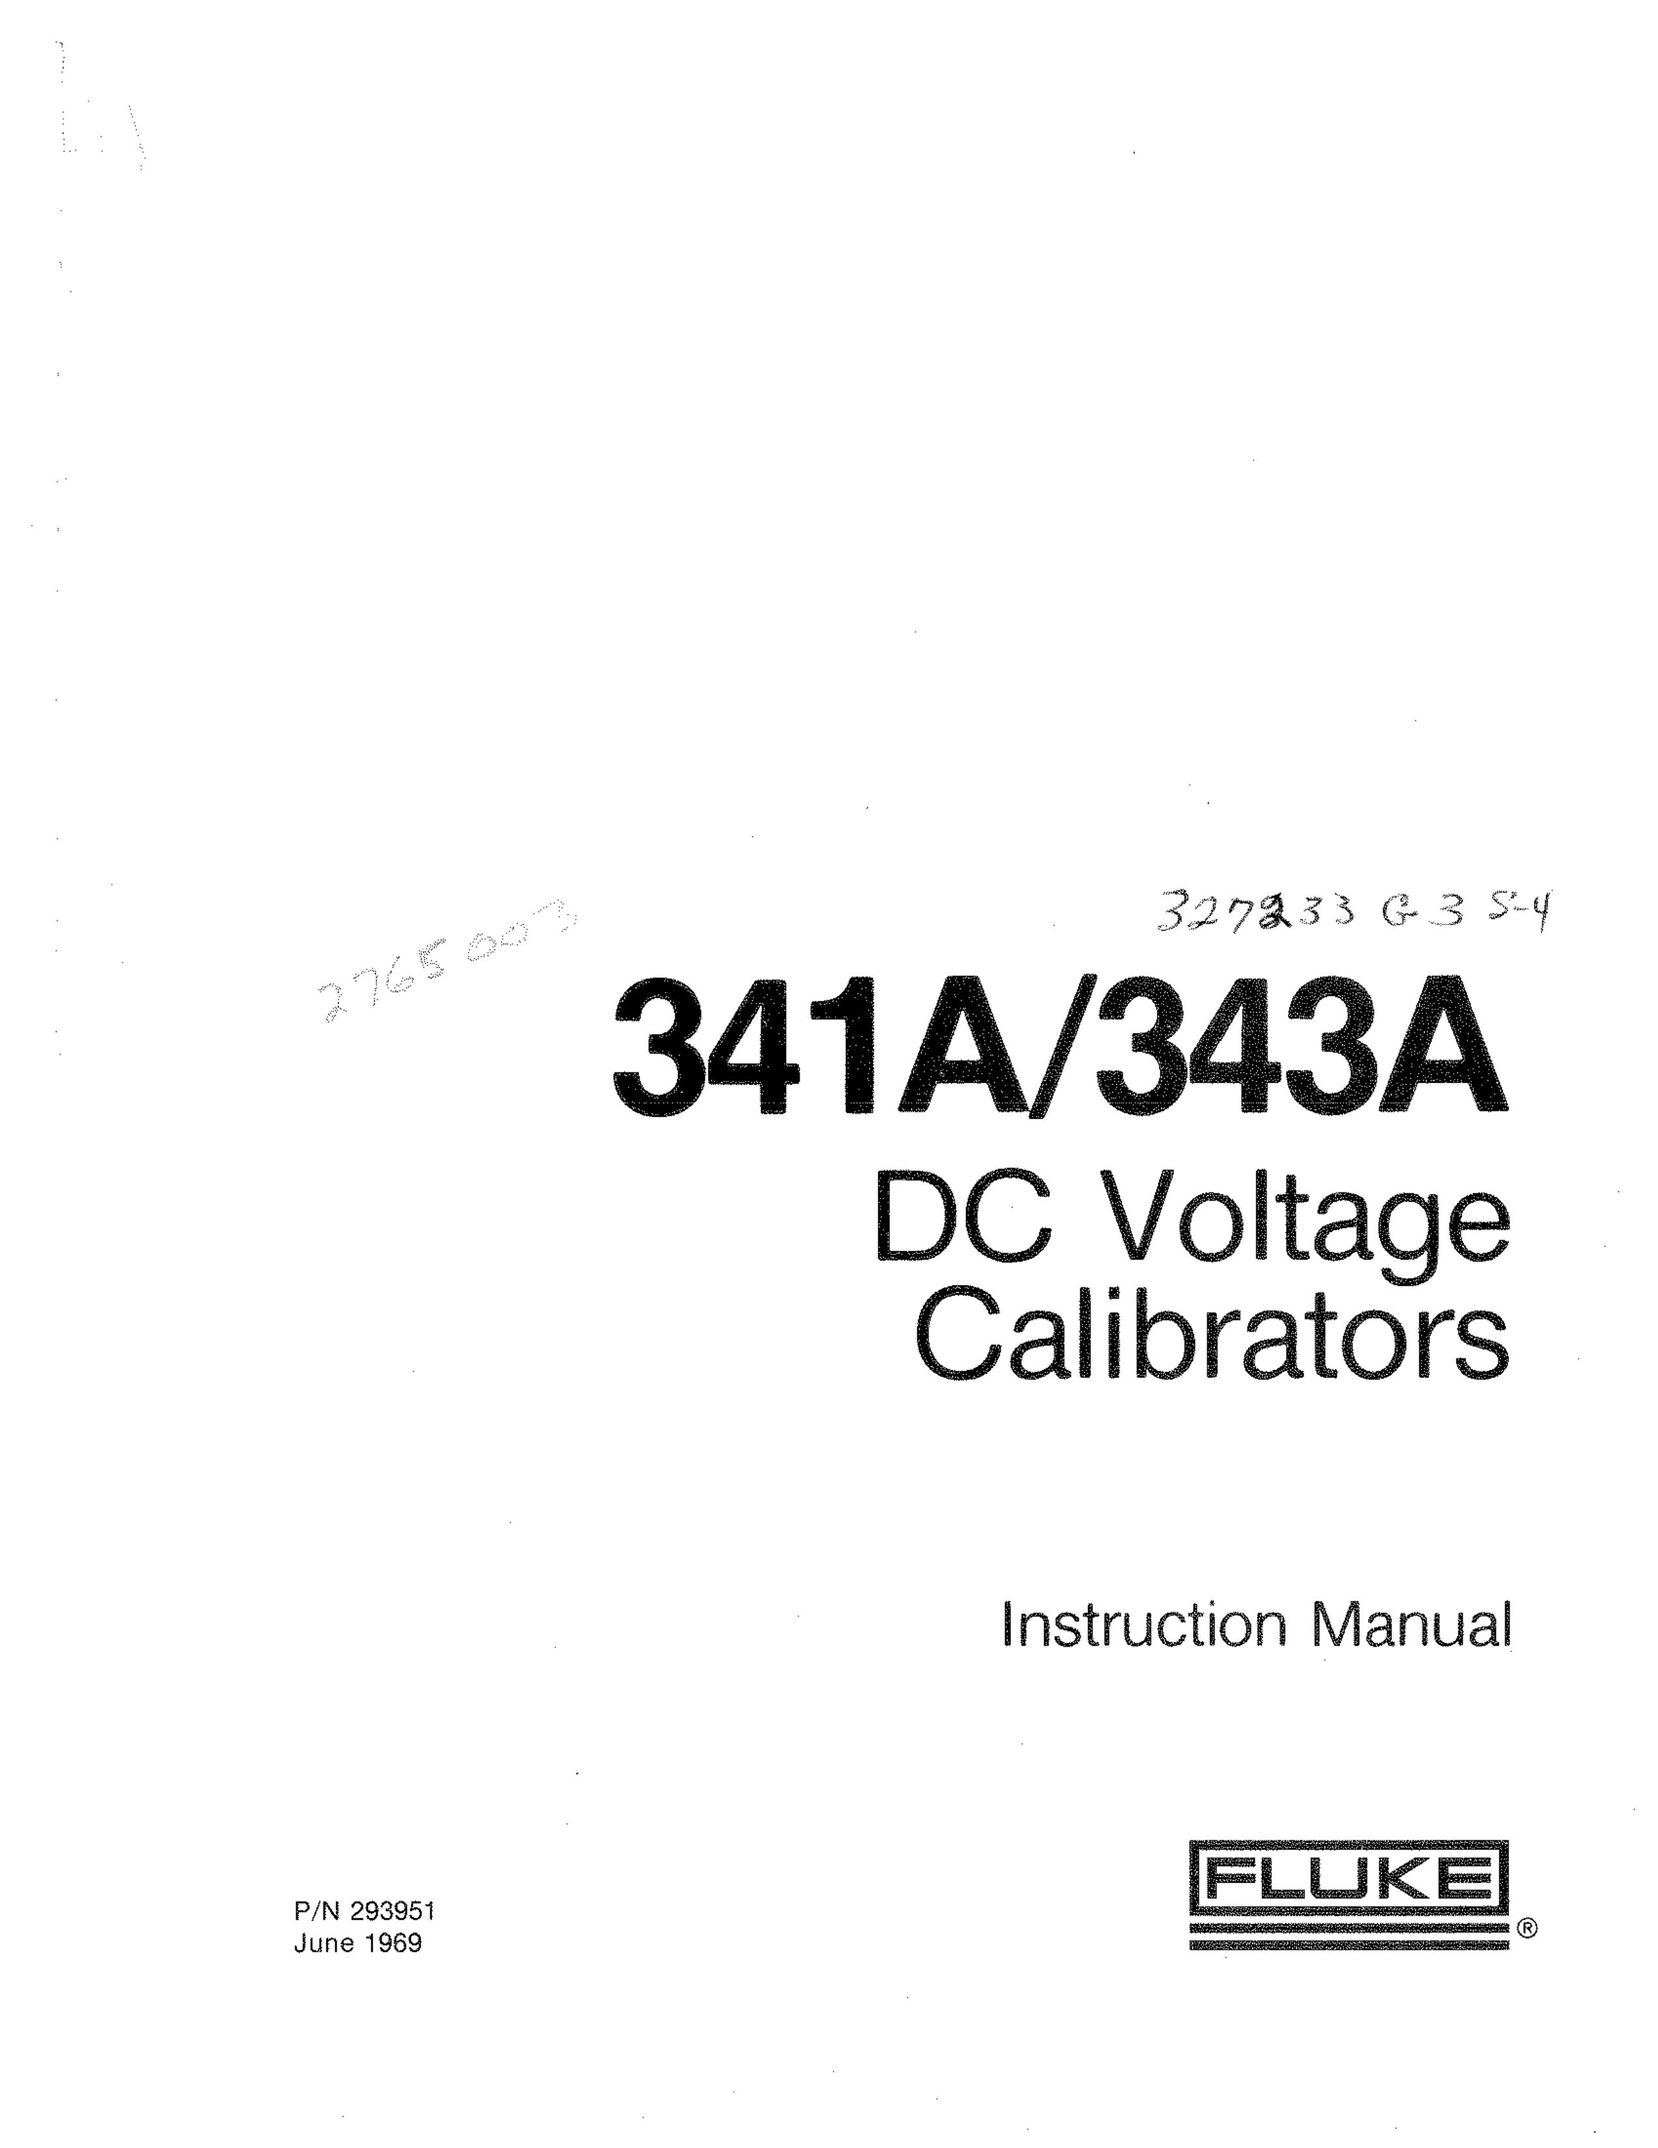 Fluke 343a dc voltage calibrators Work Light User Manual